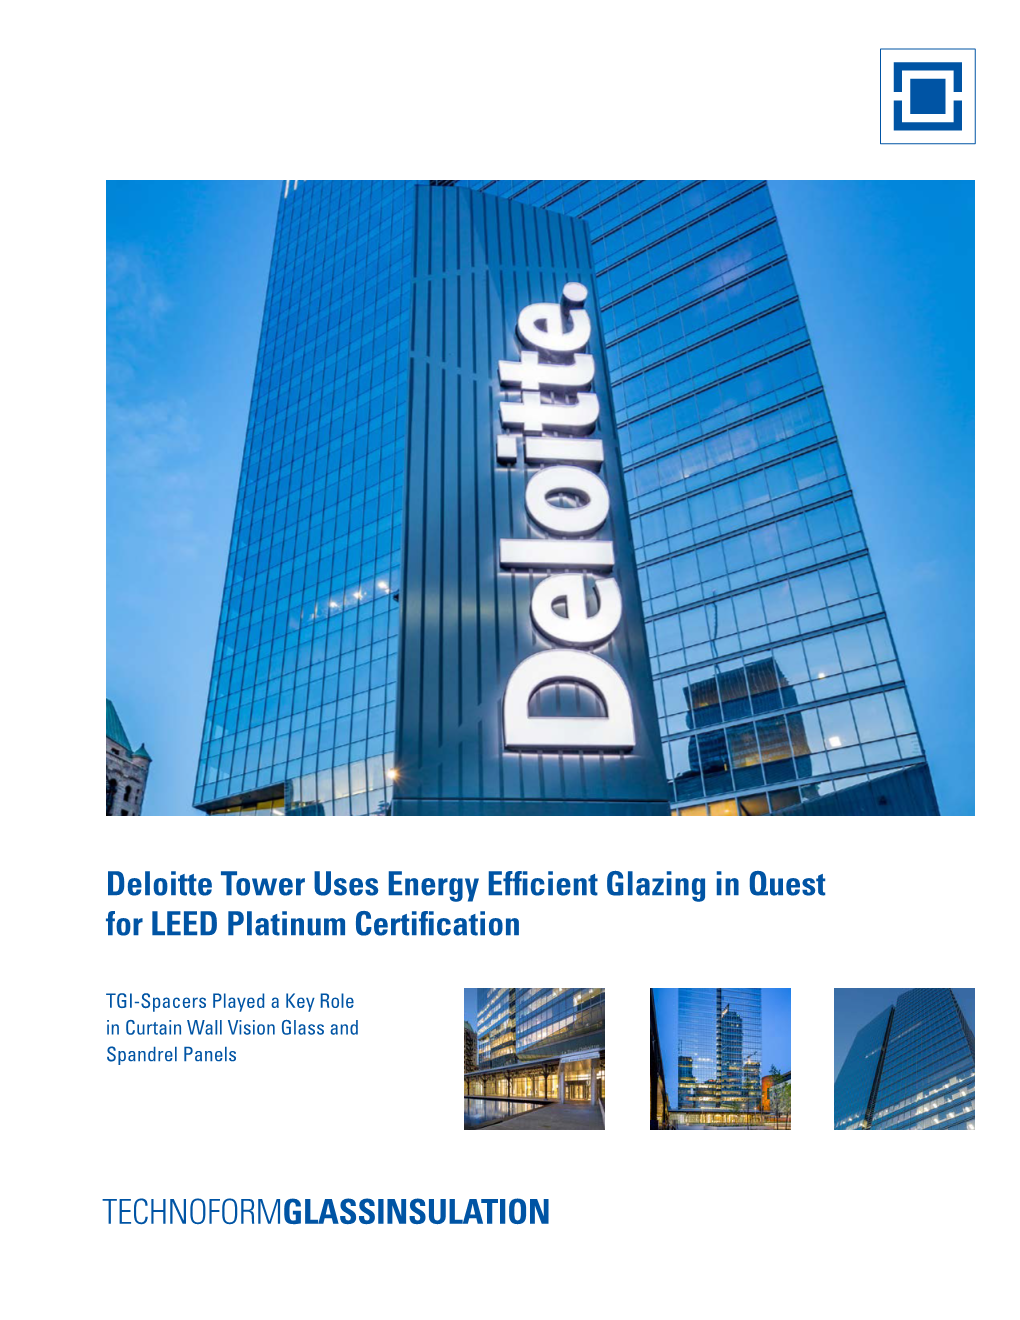 Technoformglassinsulation Deloitte Tower Uses Energy Efficient